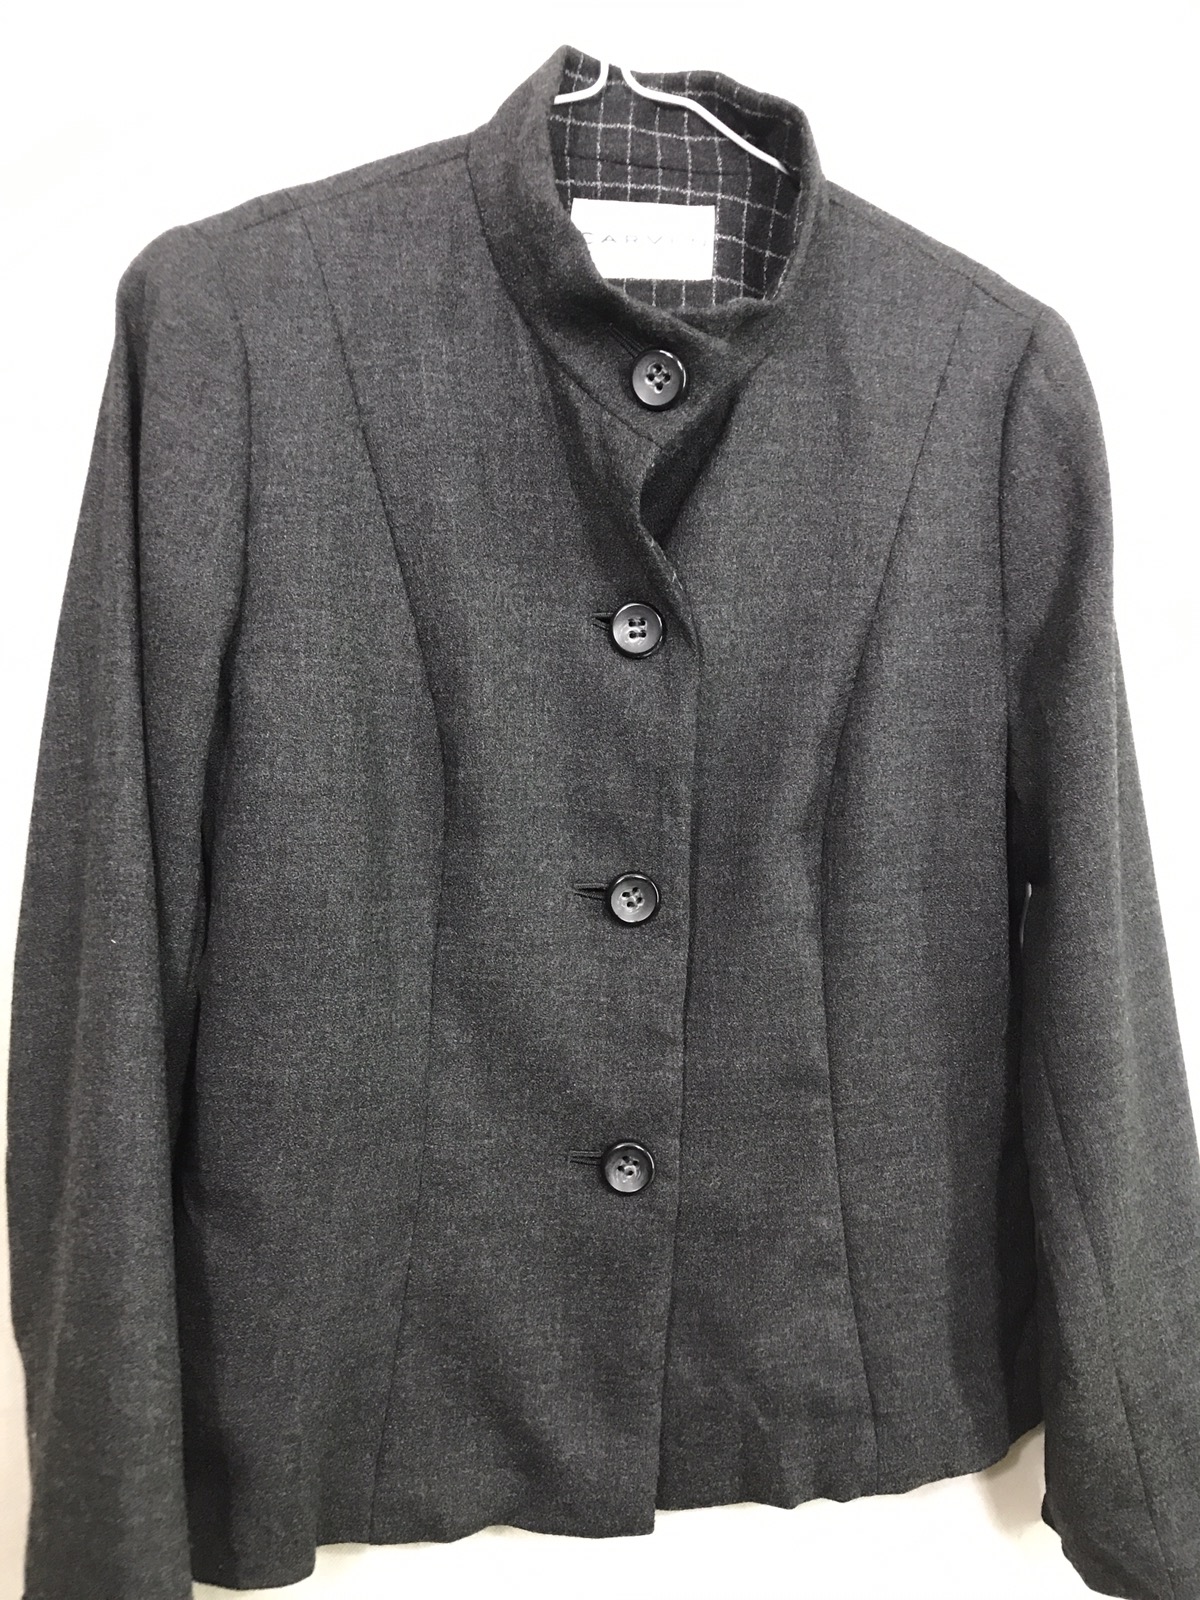 Carven wool jacket - 5